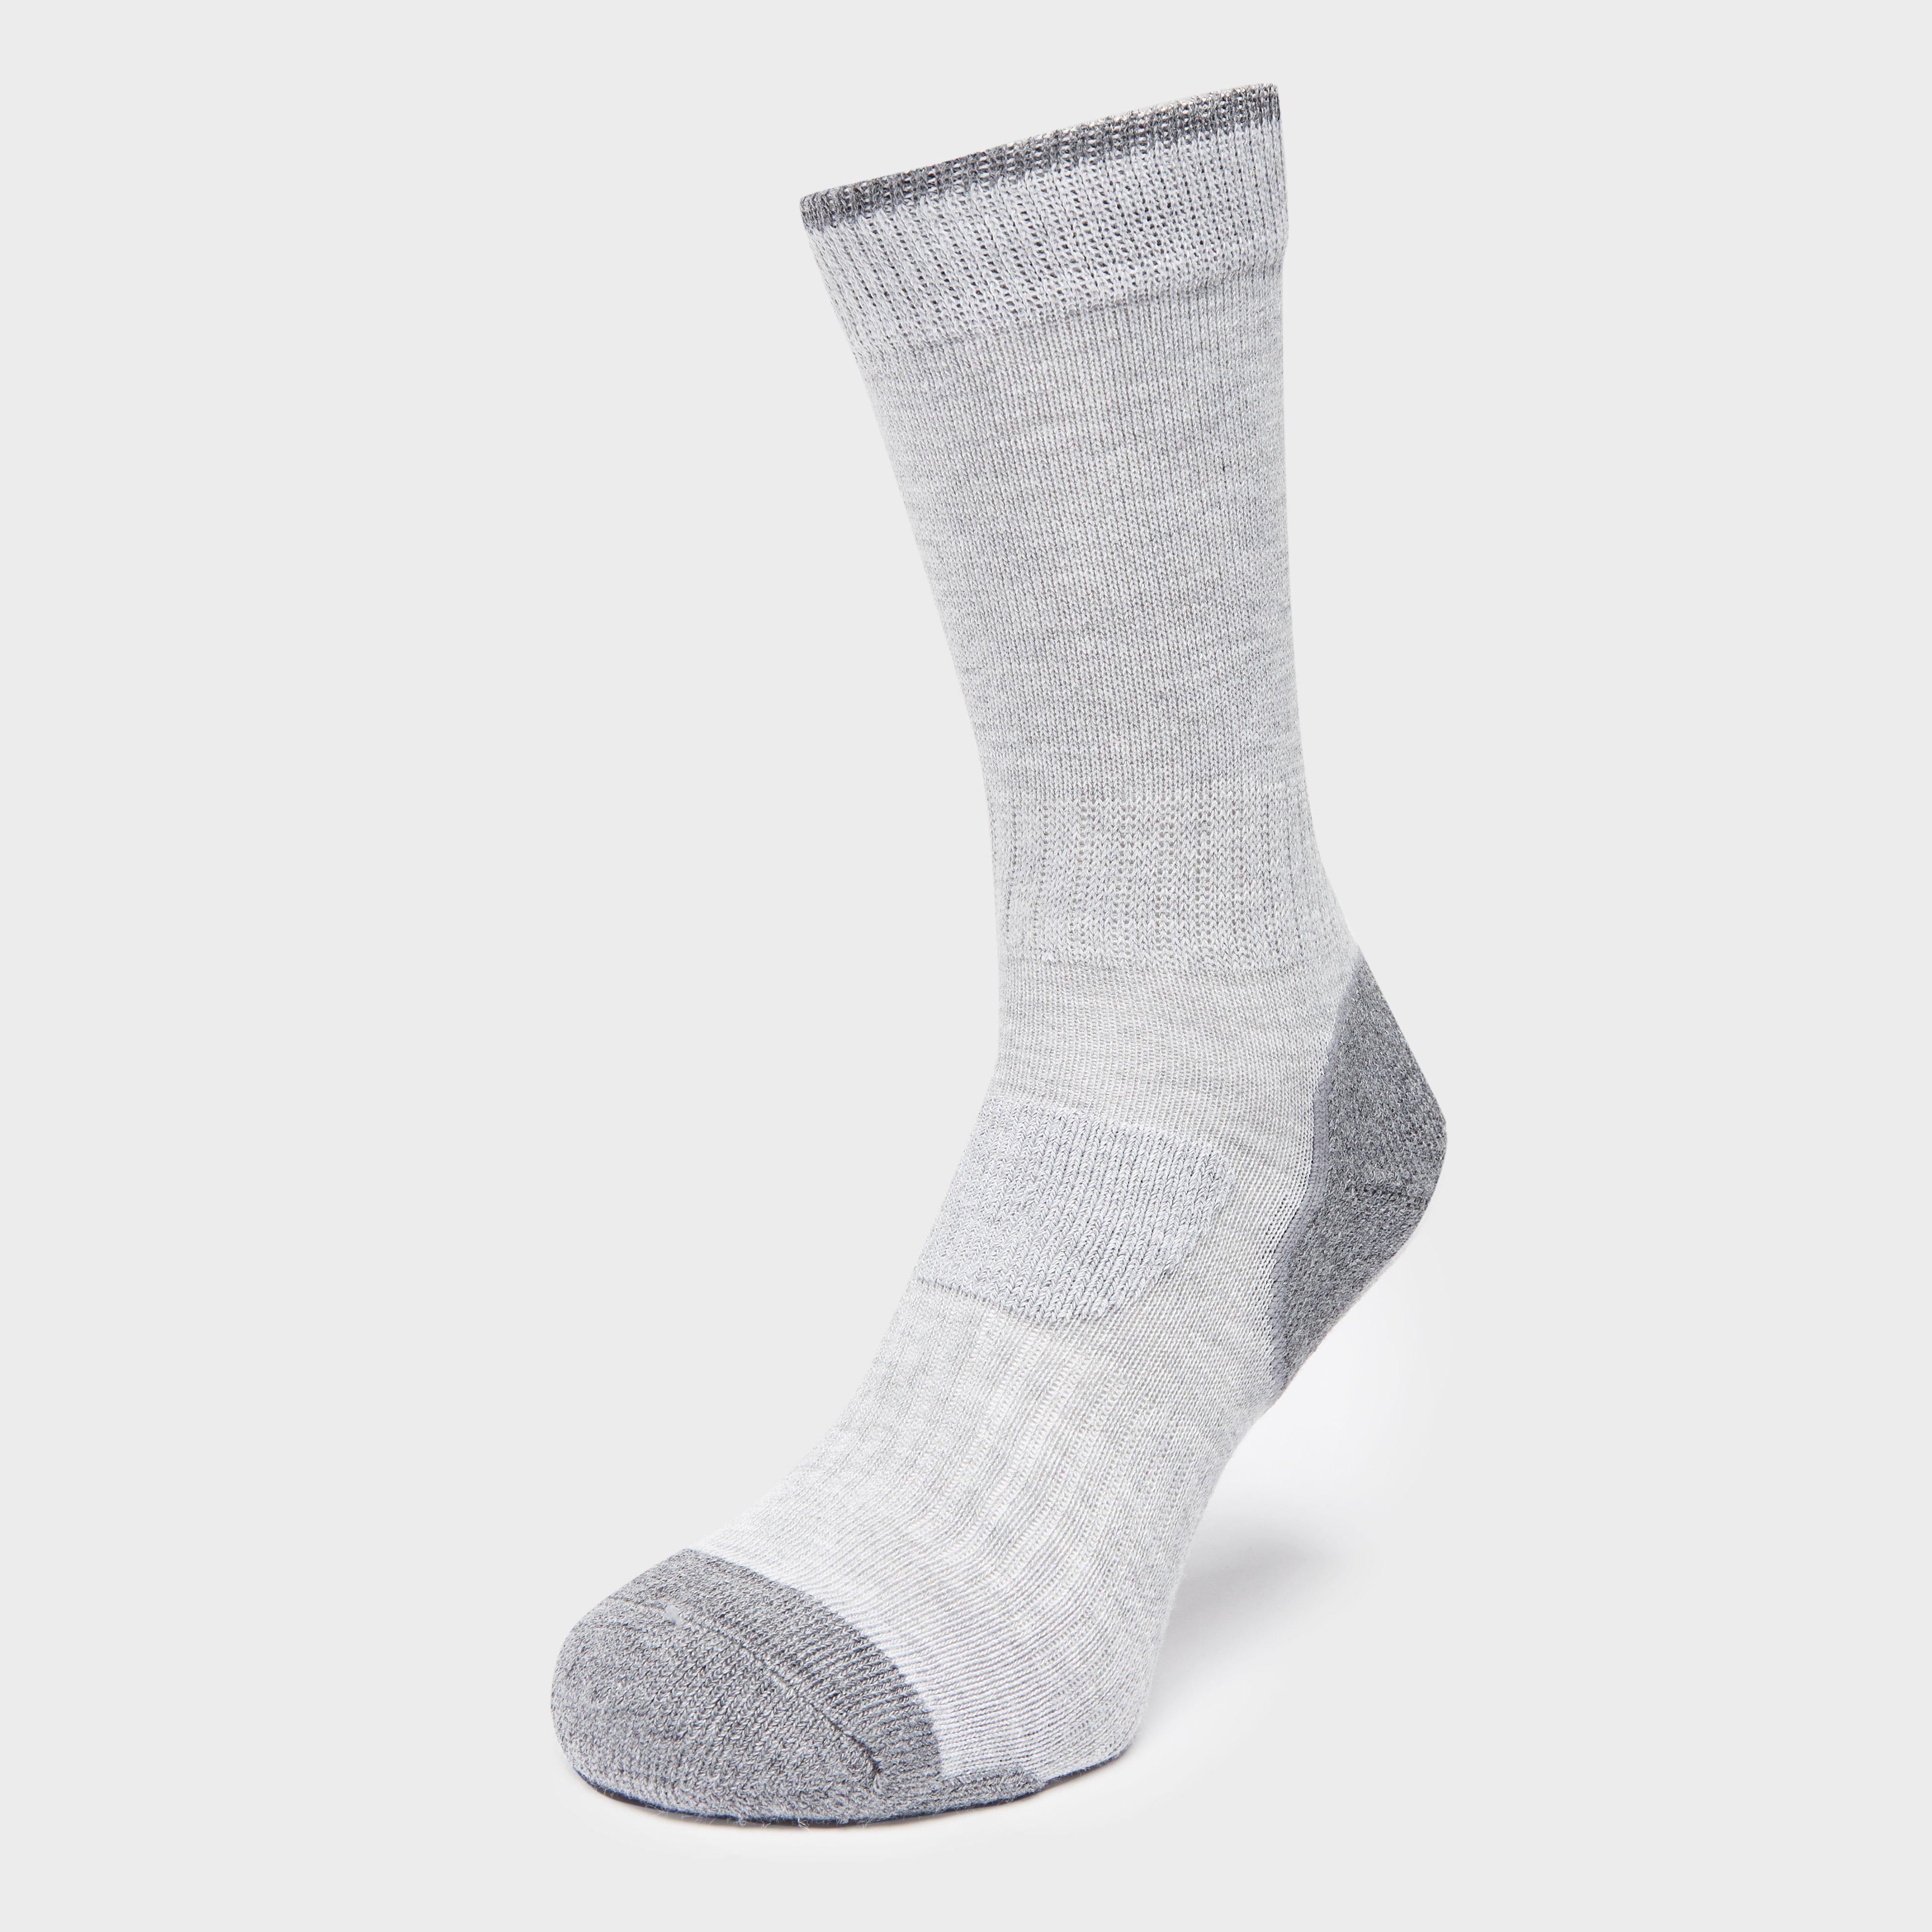 Brasher Mens Light Hiker Socks - Grey/lgy  Grey/lgy